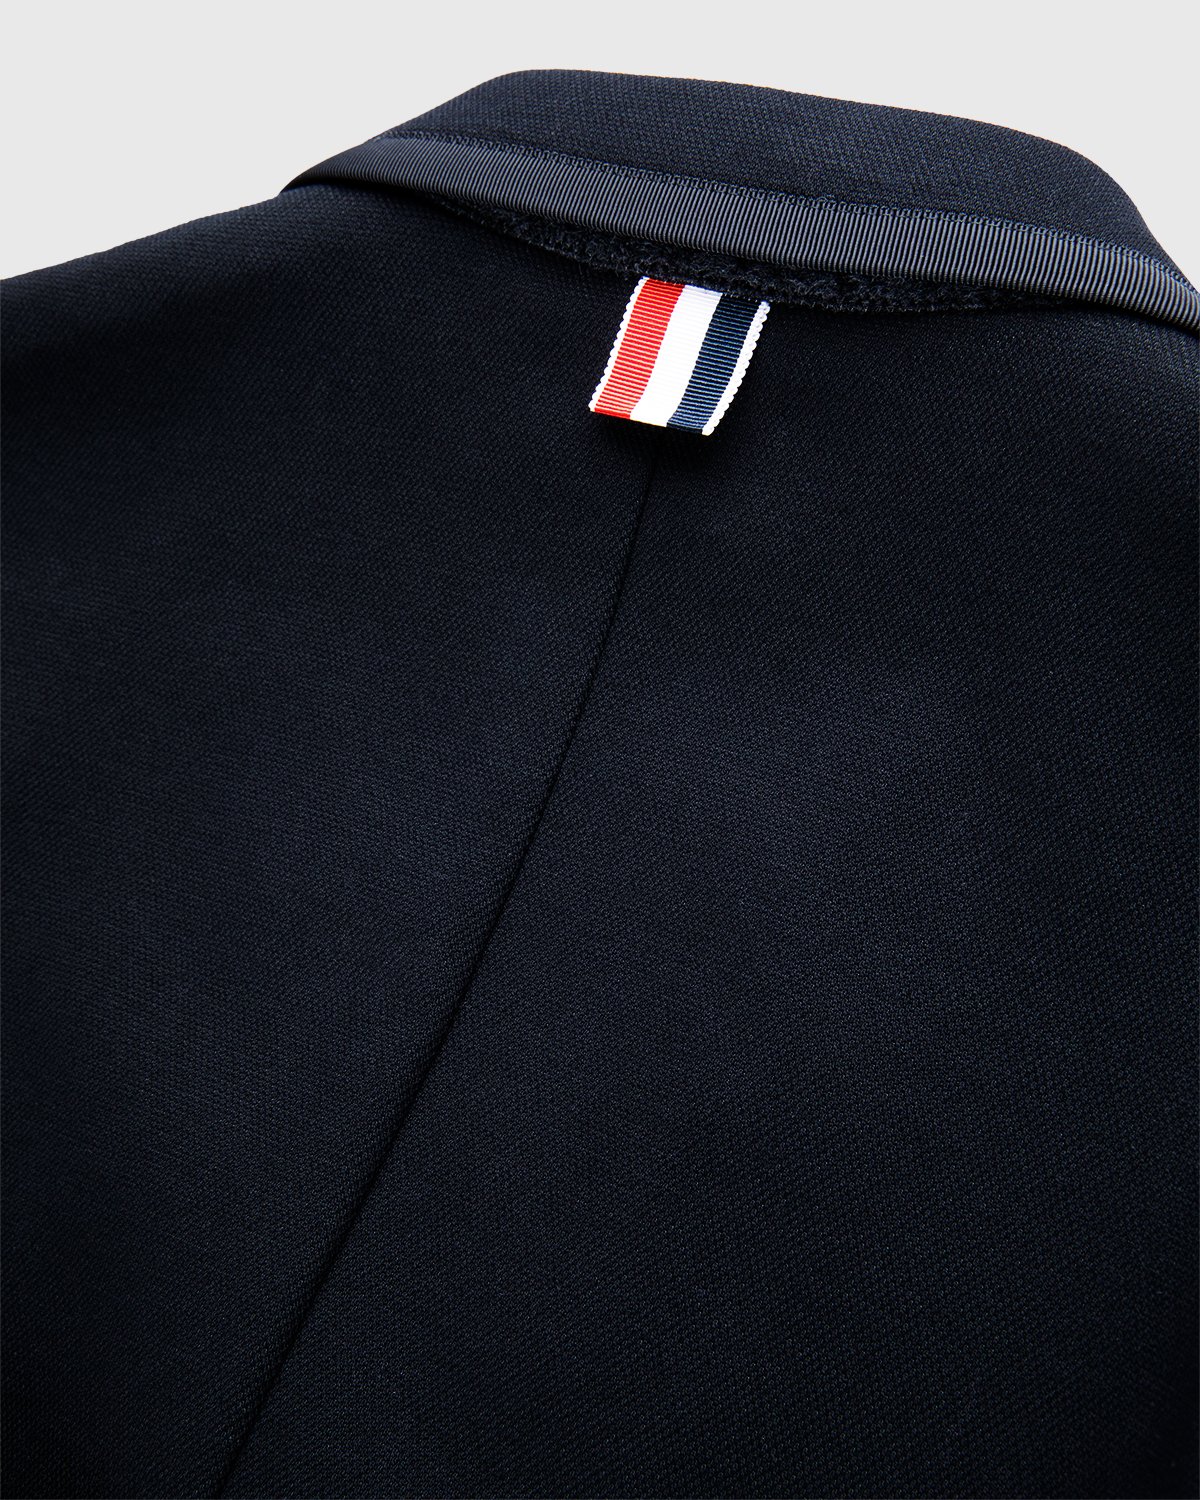 Thom Browne x Highsnobiety - Men Deconstructed Sport Jacket Black - Clothing - Black - Image 5